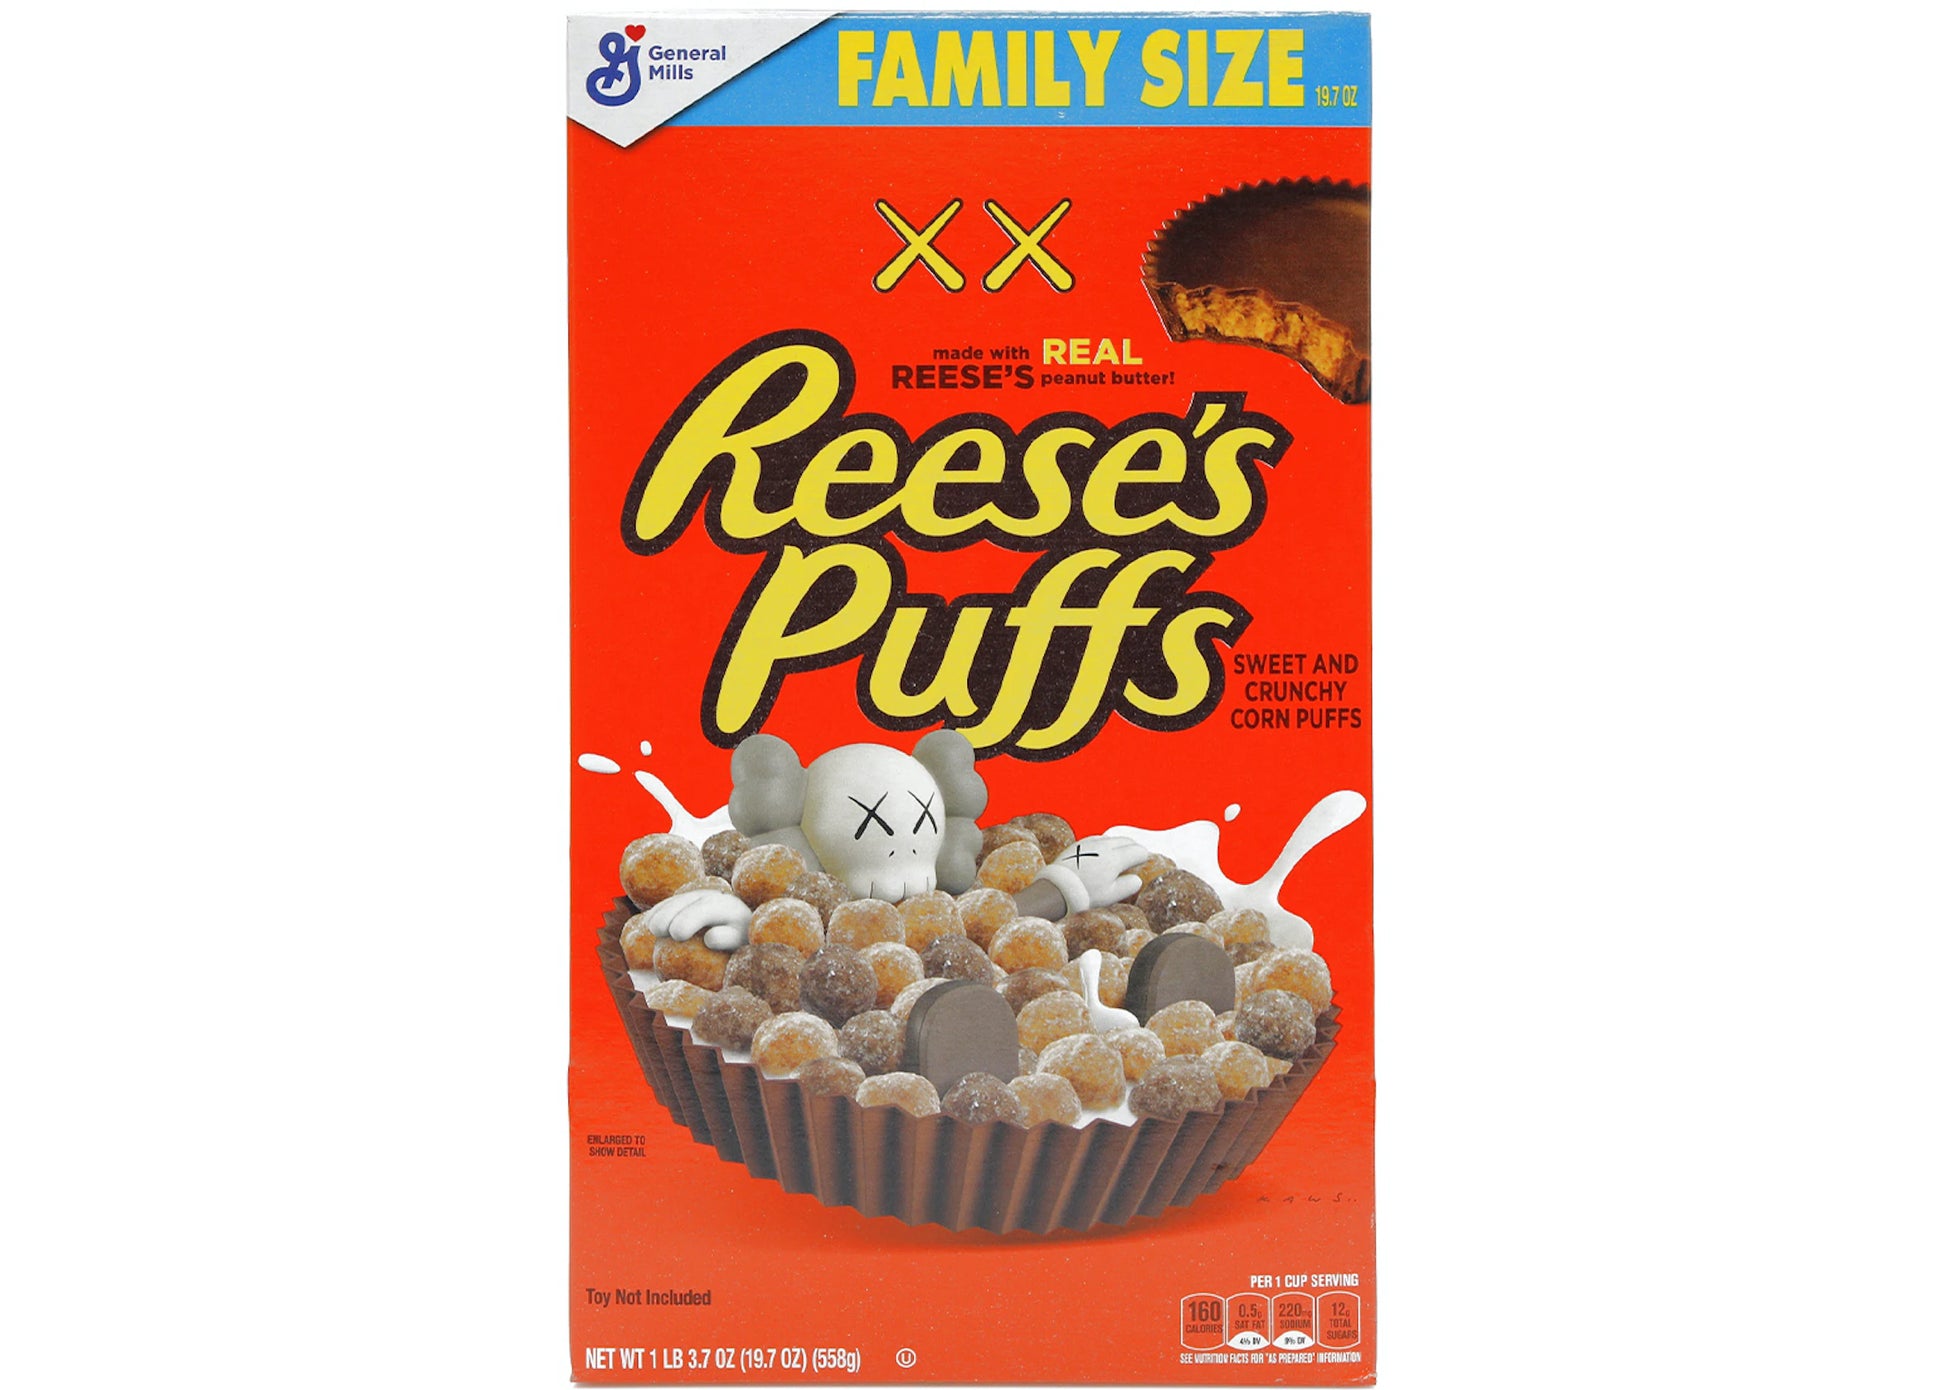 Reese’s Puffs x KAWS Family Size Original Limited Edition 1* edition "da collezione" kaws Reese's puffs stuff